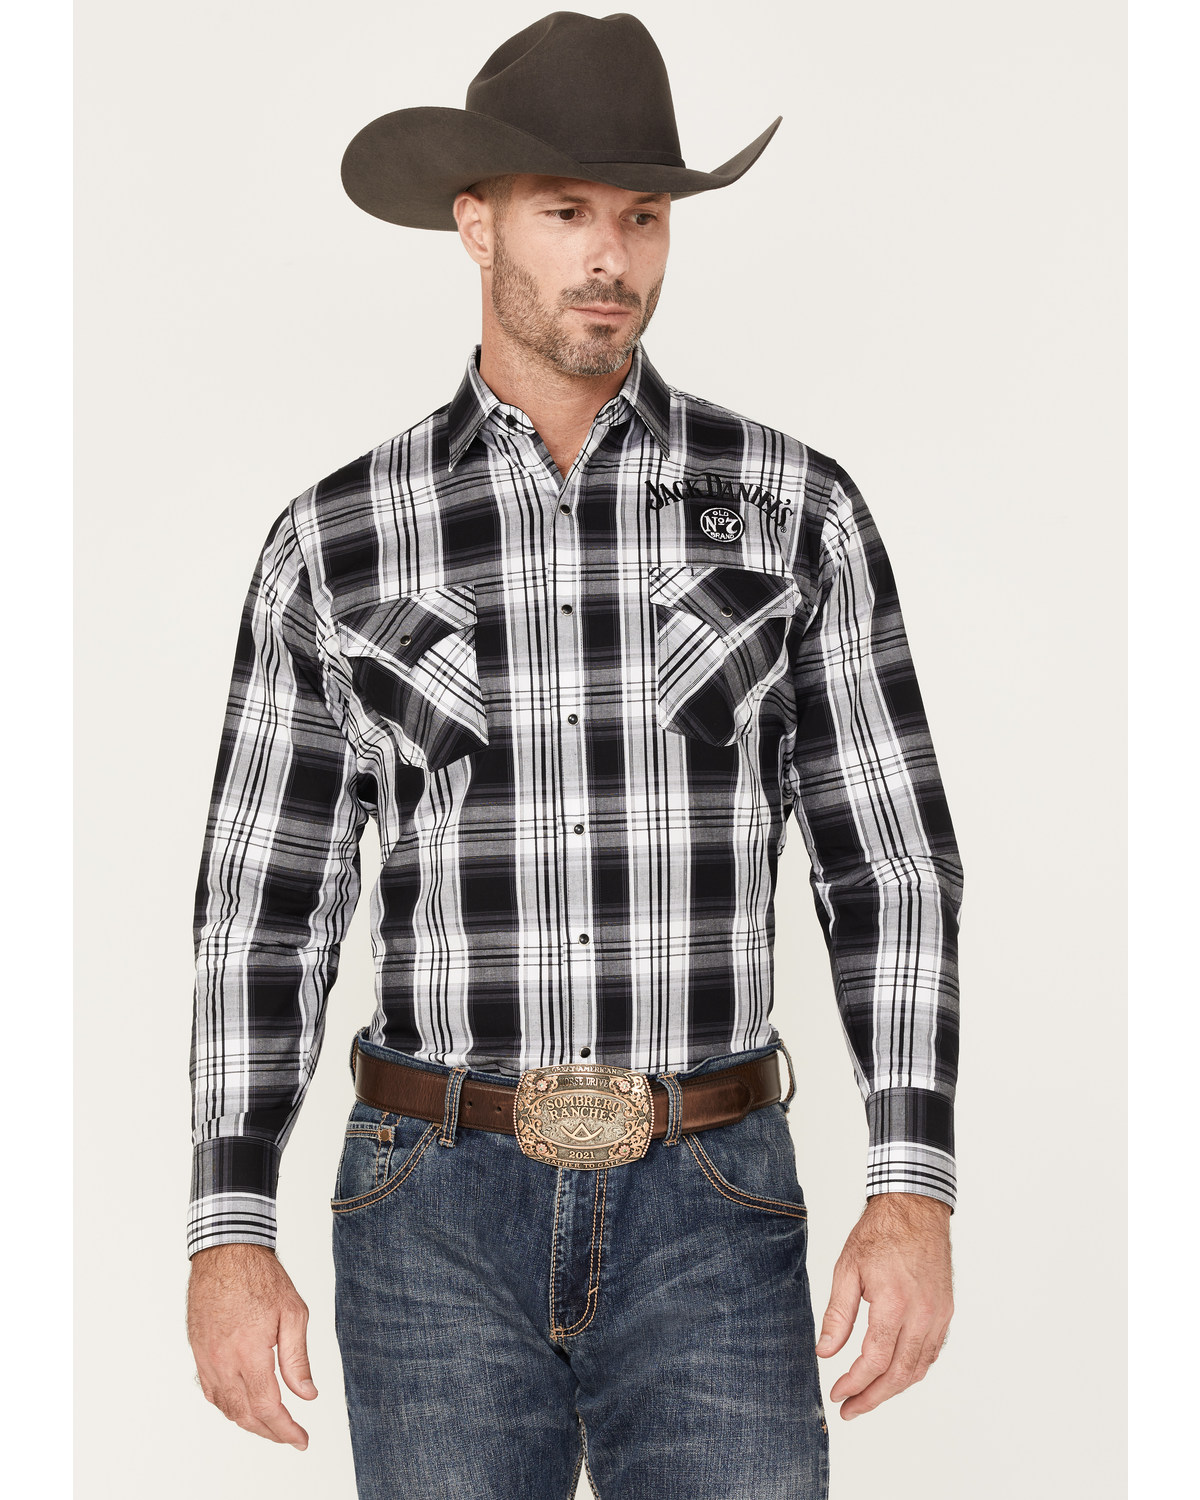 Ely Walker Men's Jack Daniel's Plaid Print Long Sleeve Snap Western Shirt